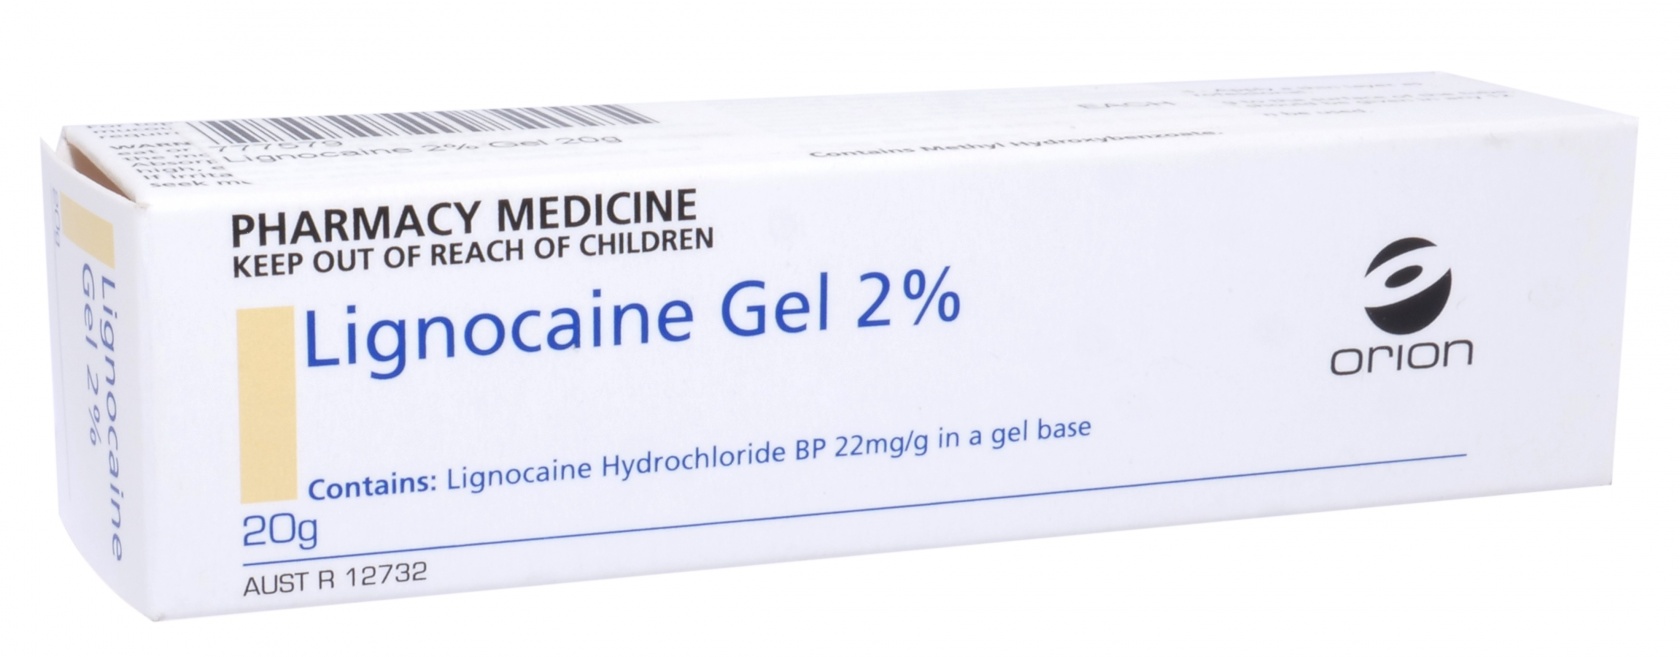 Lignocaine 2% Gel 20g image 0